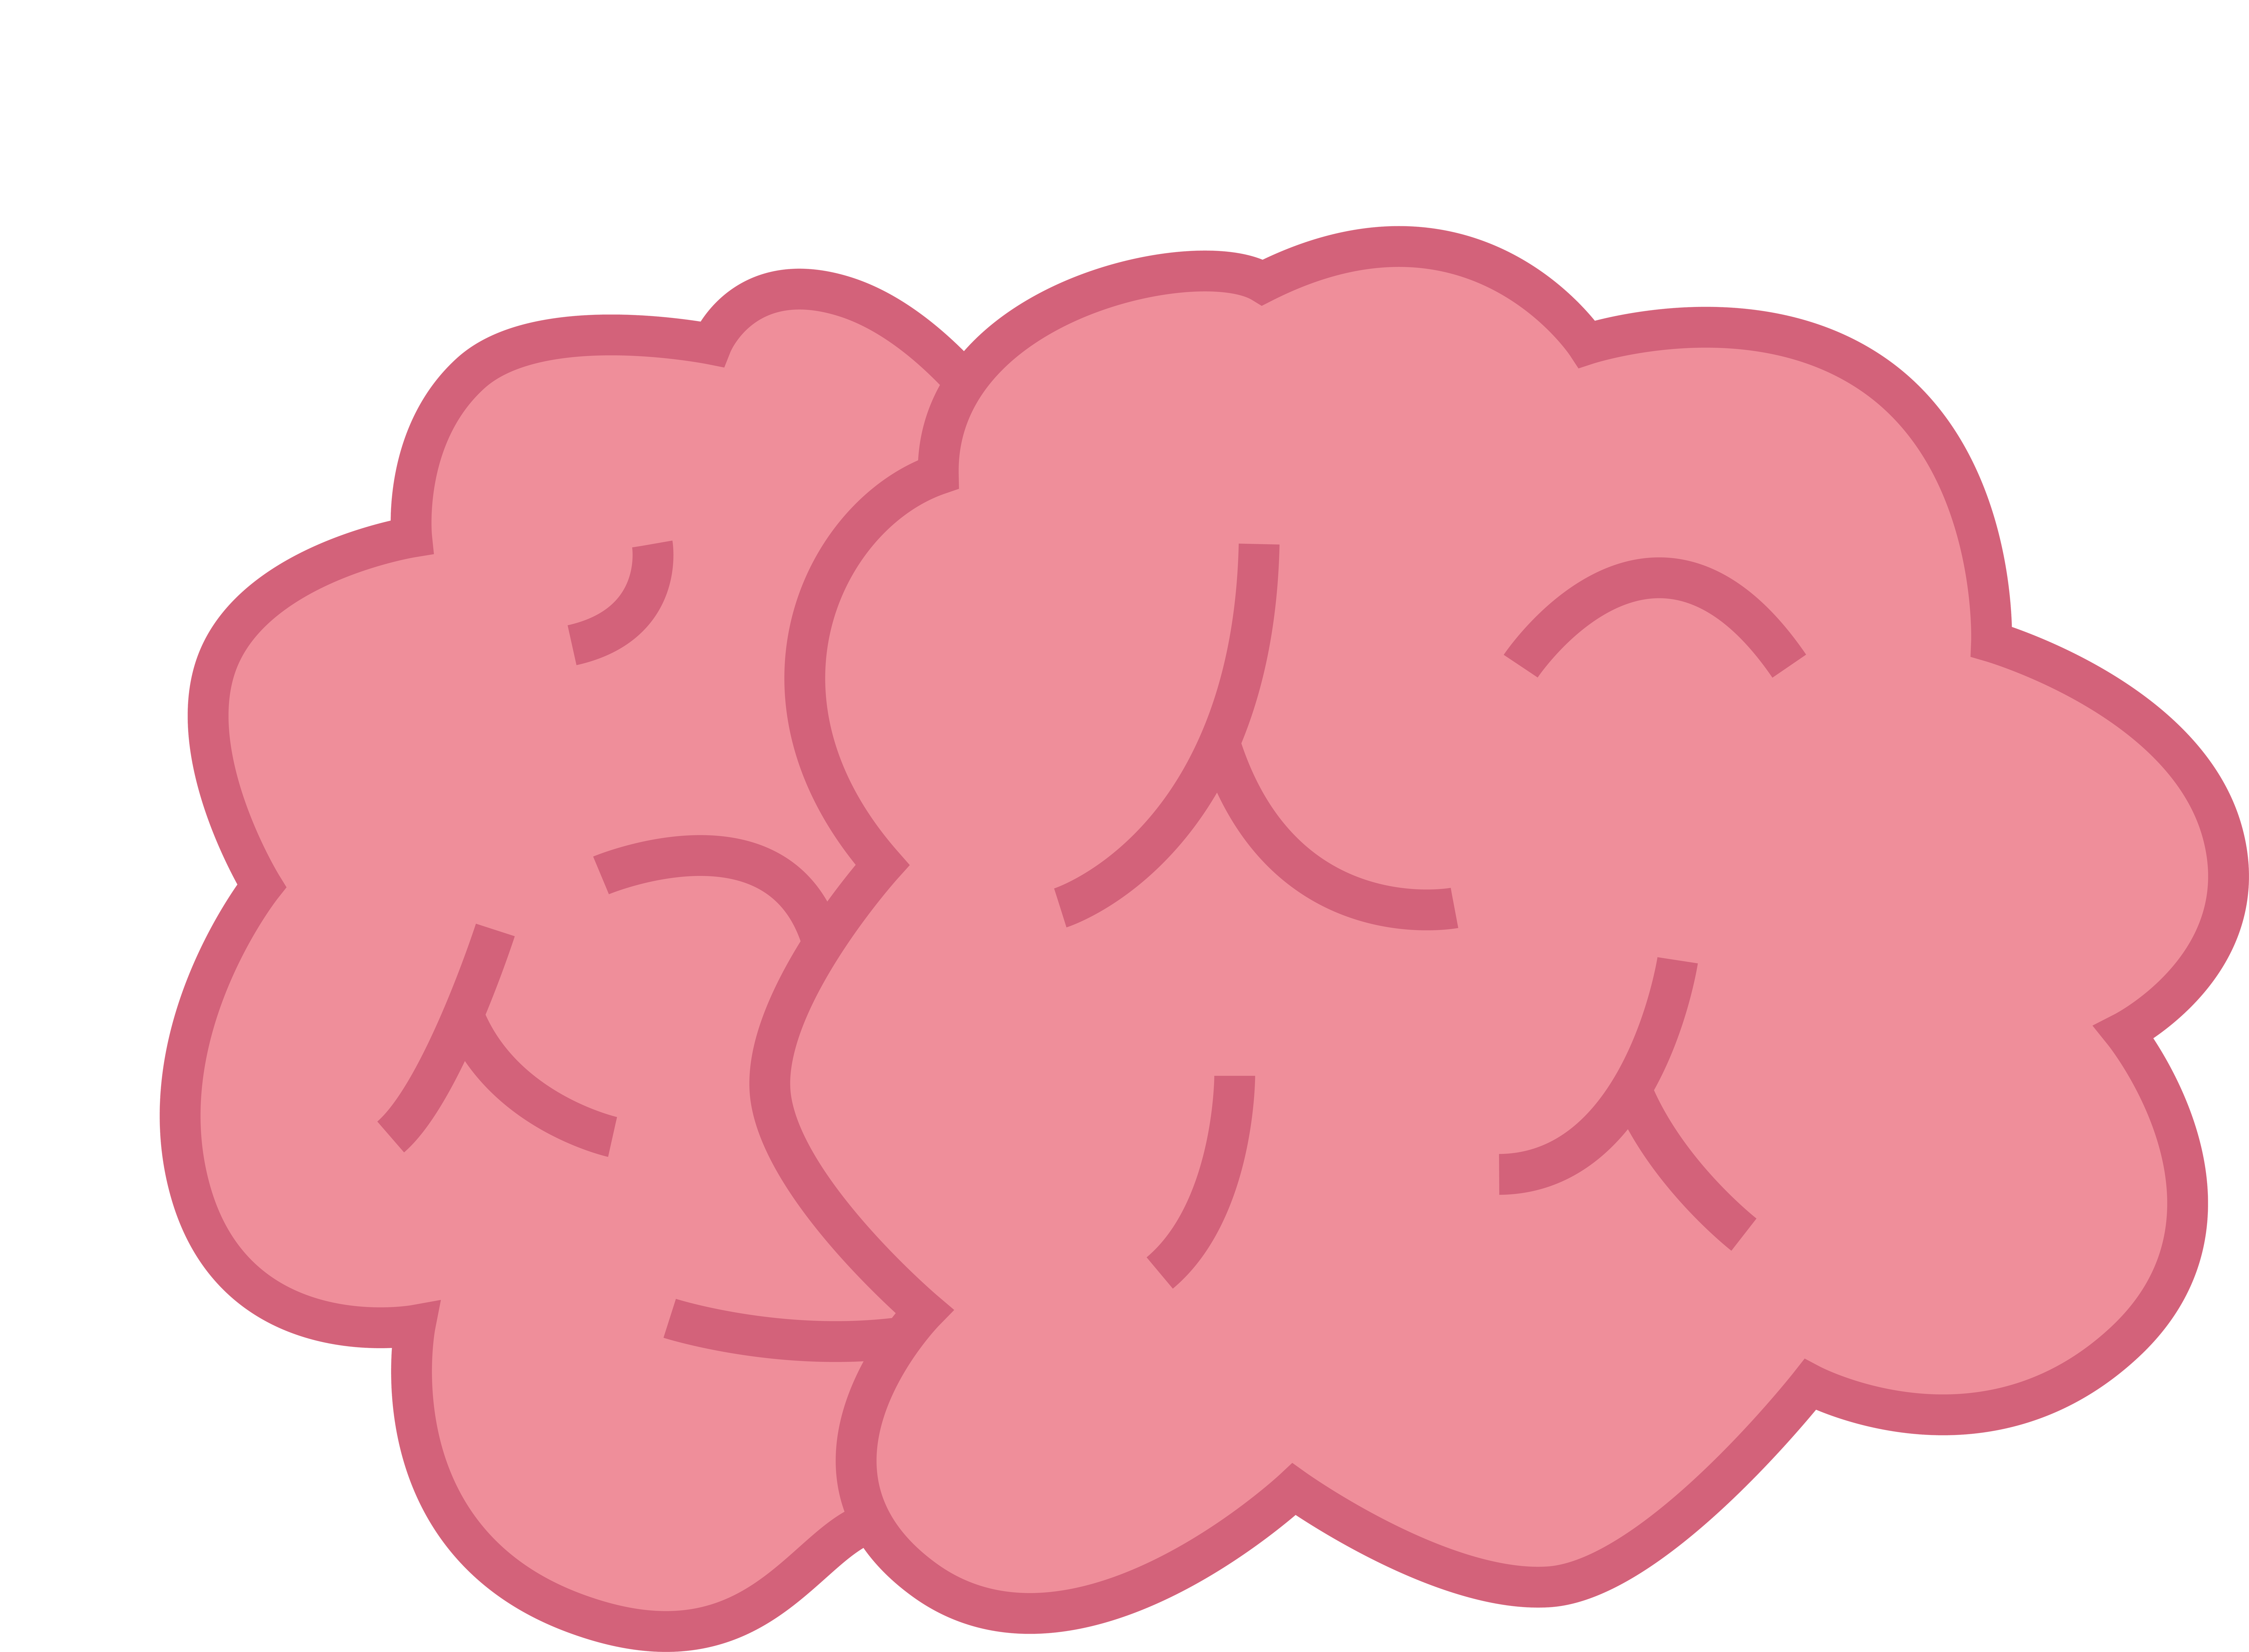 Animated Brain Image